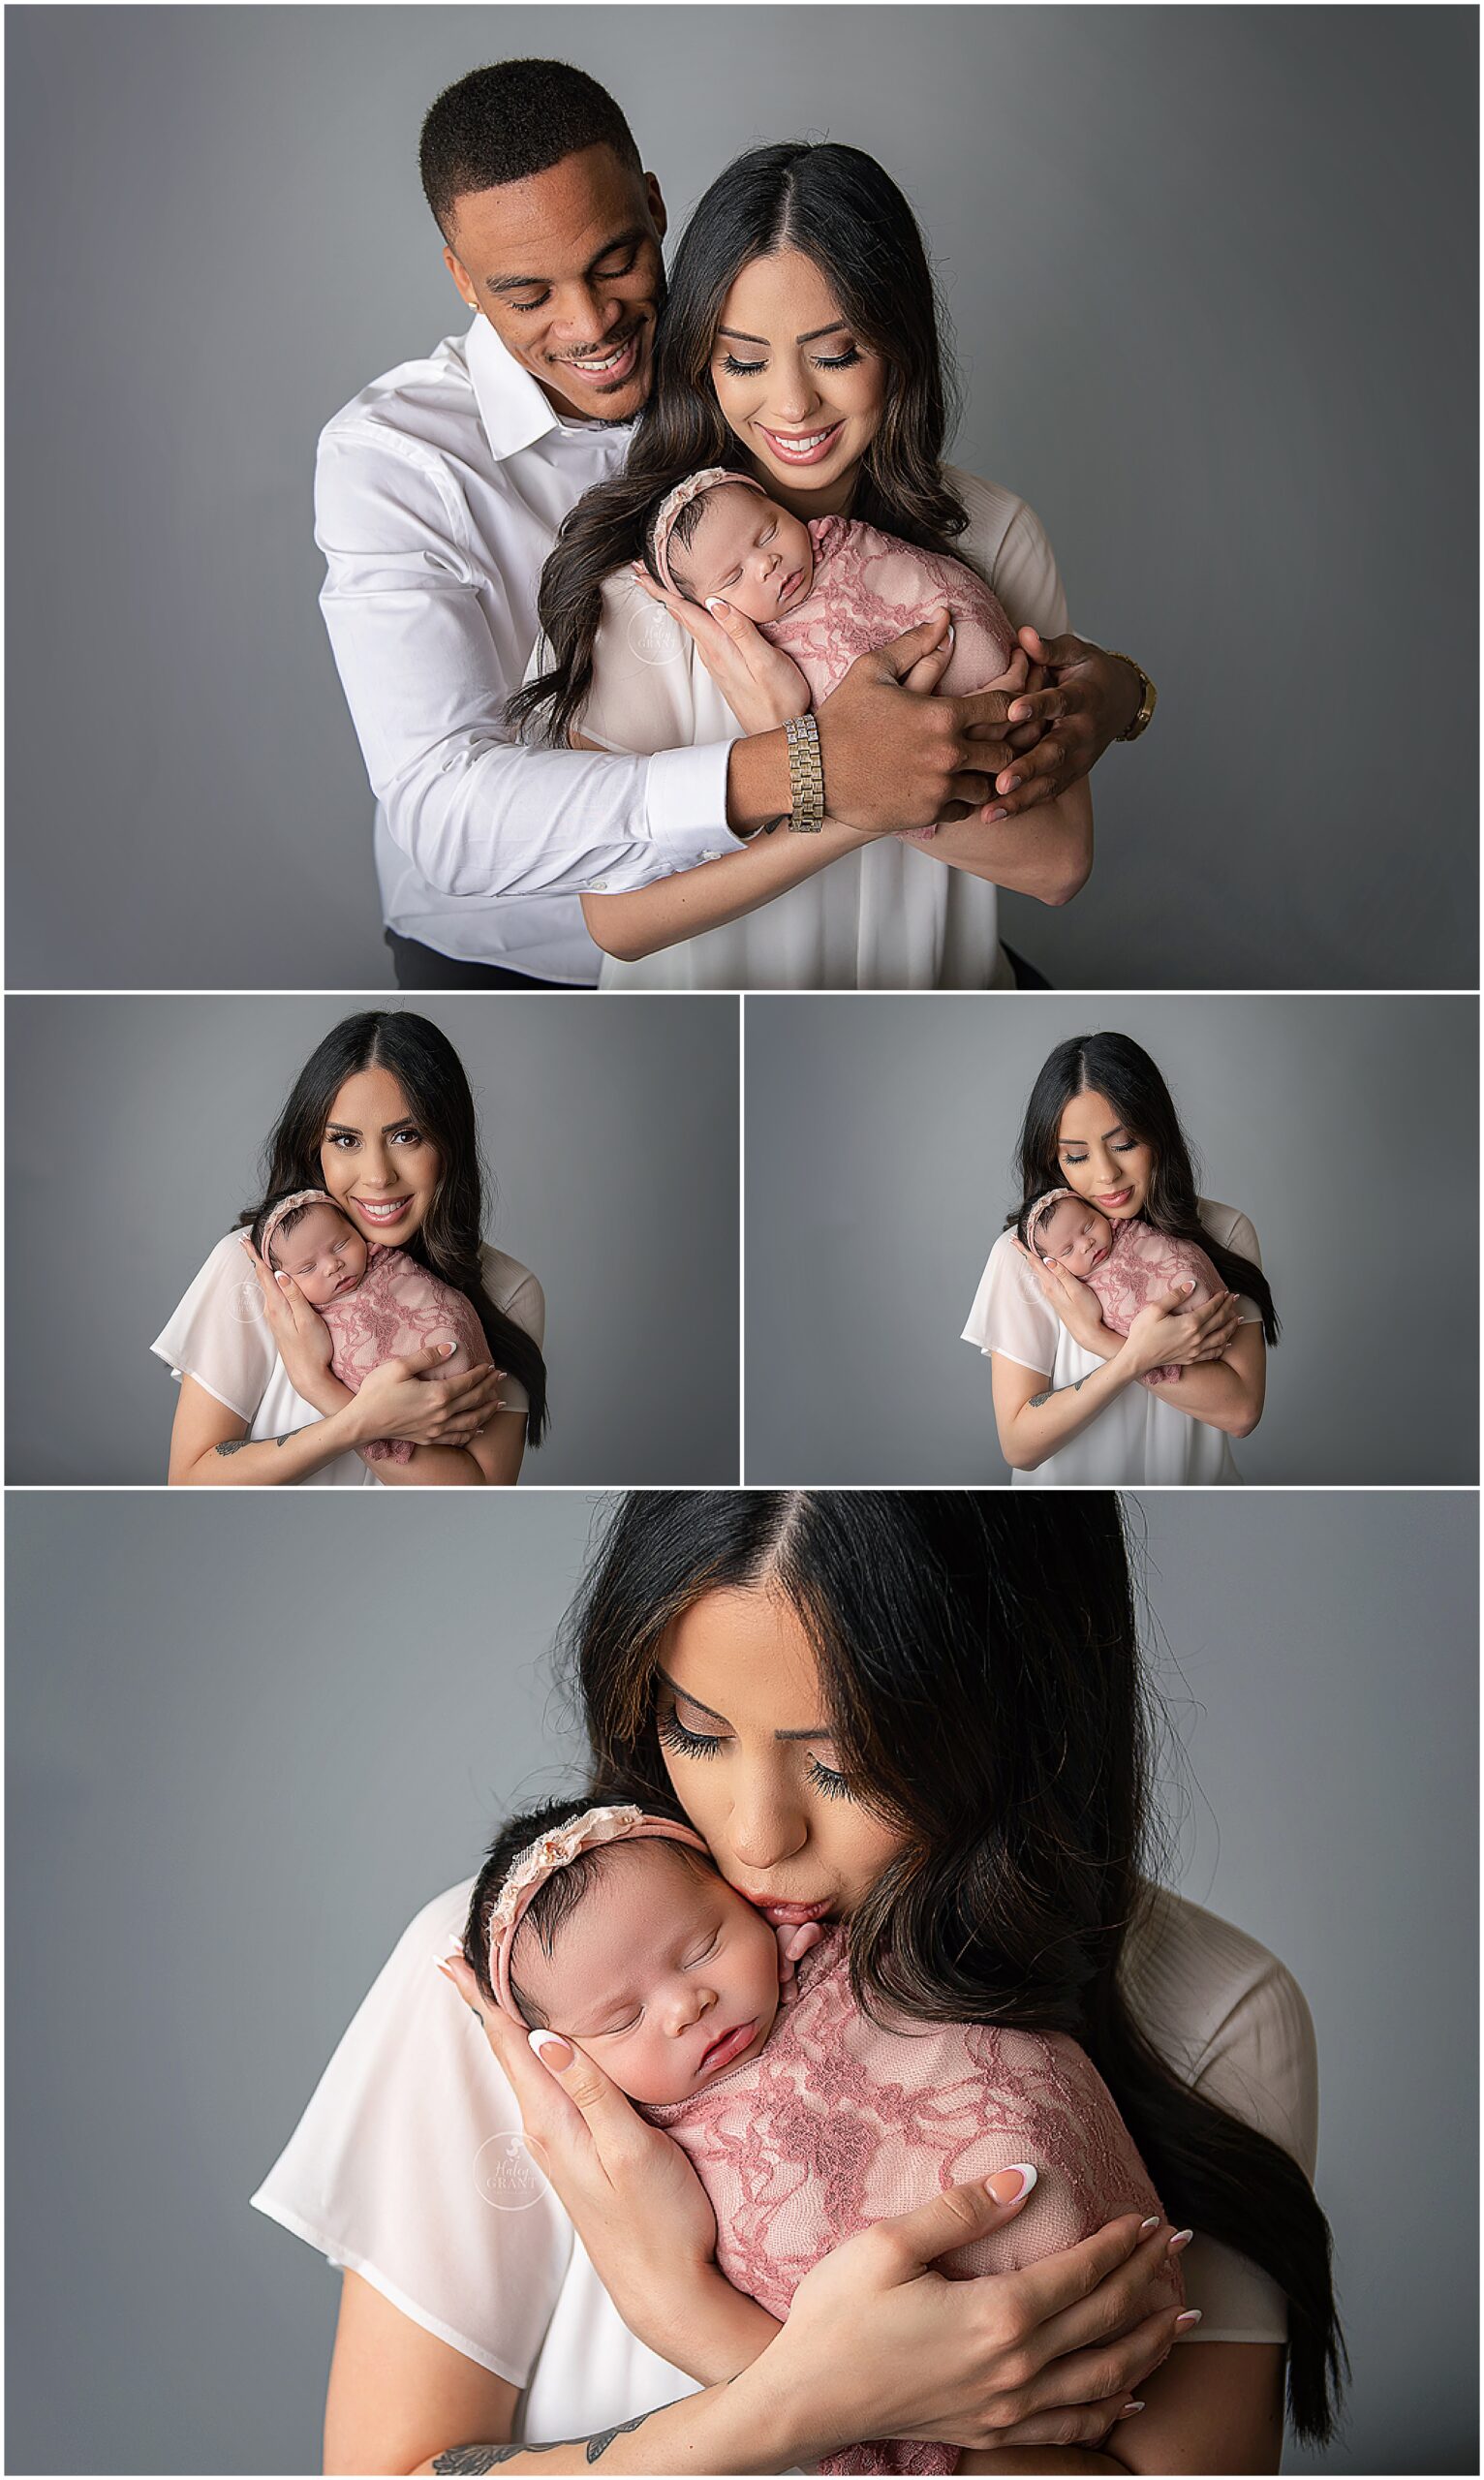 Newborn Baby Photographers in Austin, Texas Haley Grant Photography